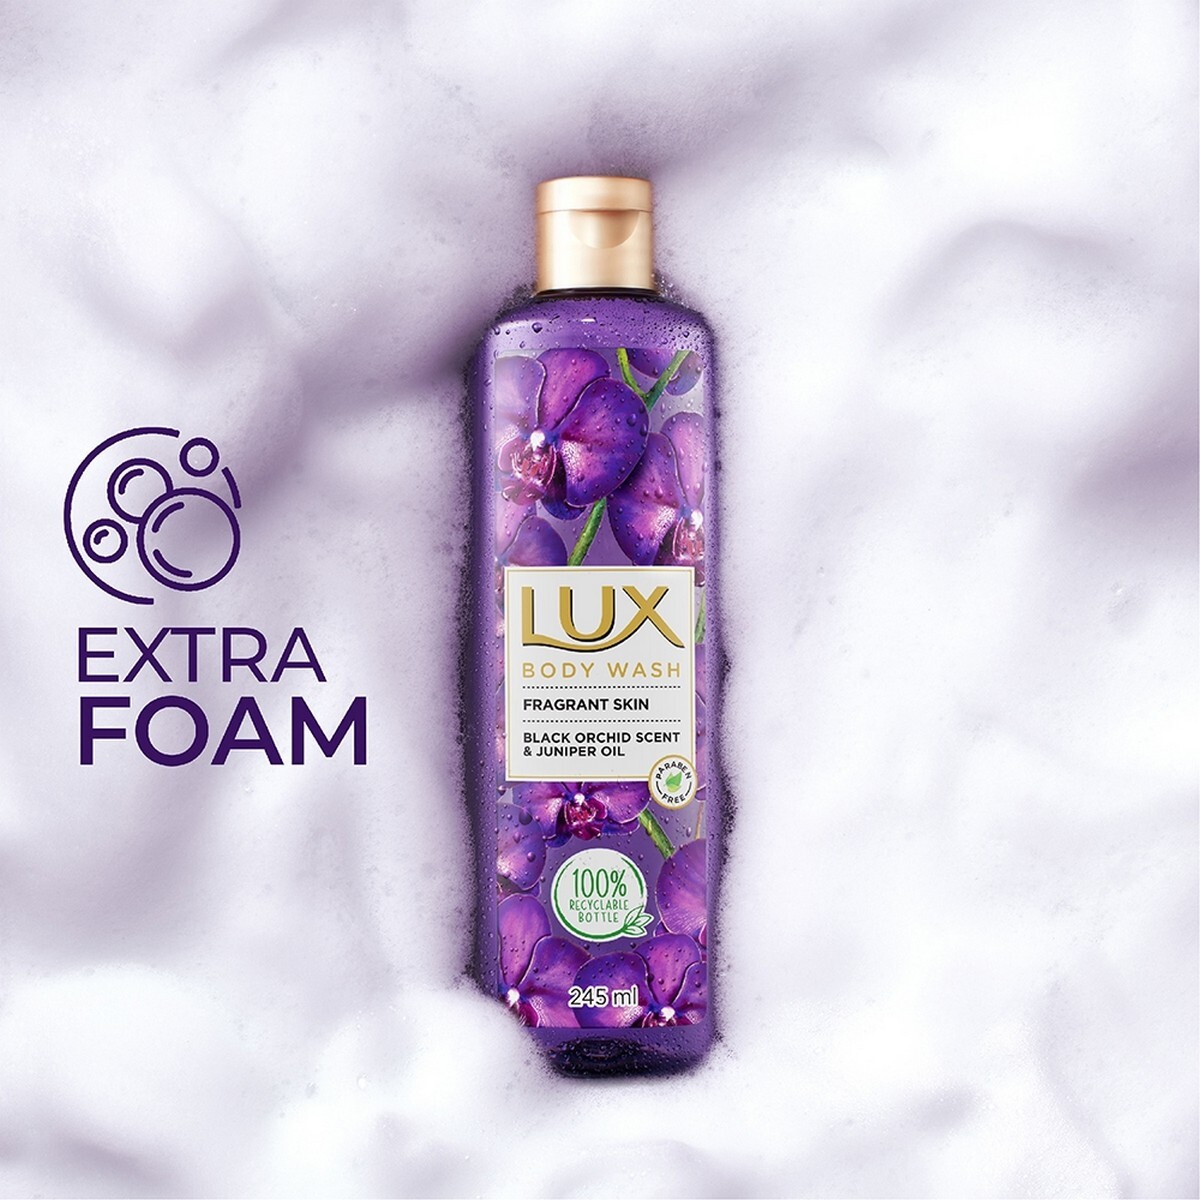 Lux Body Wash For Fragrant Skin 245Ml